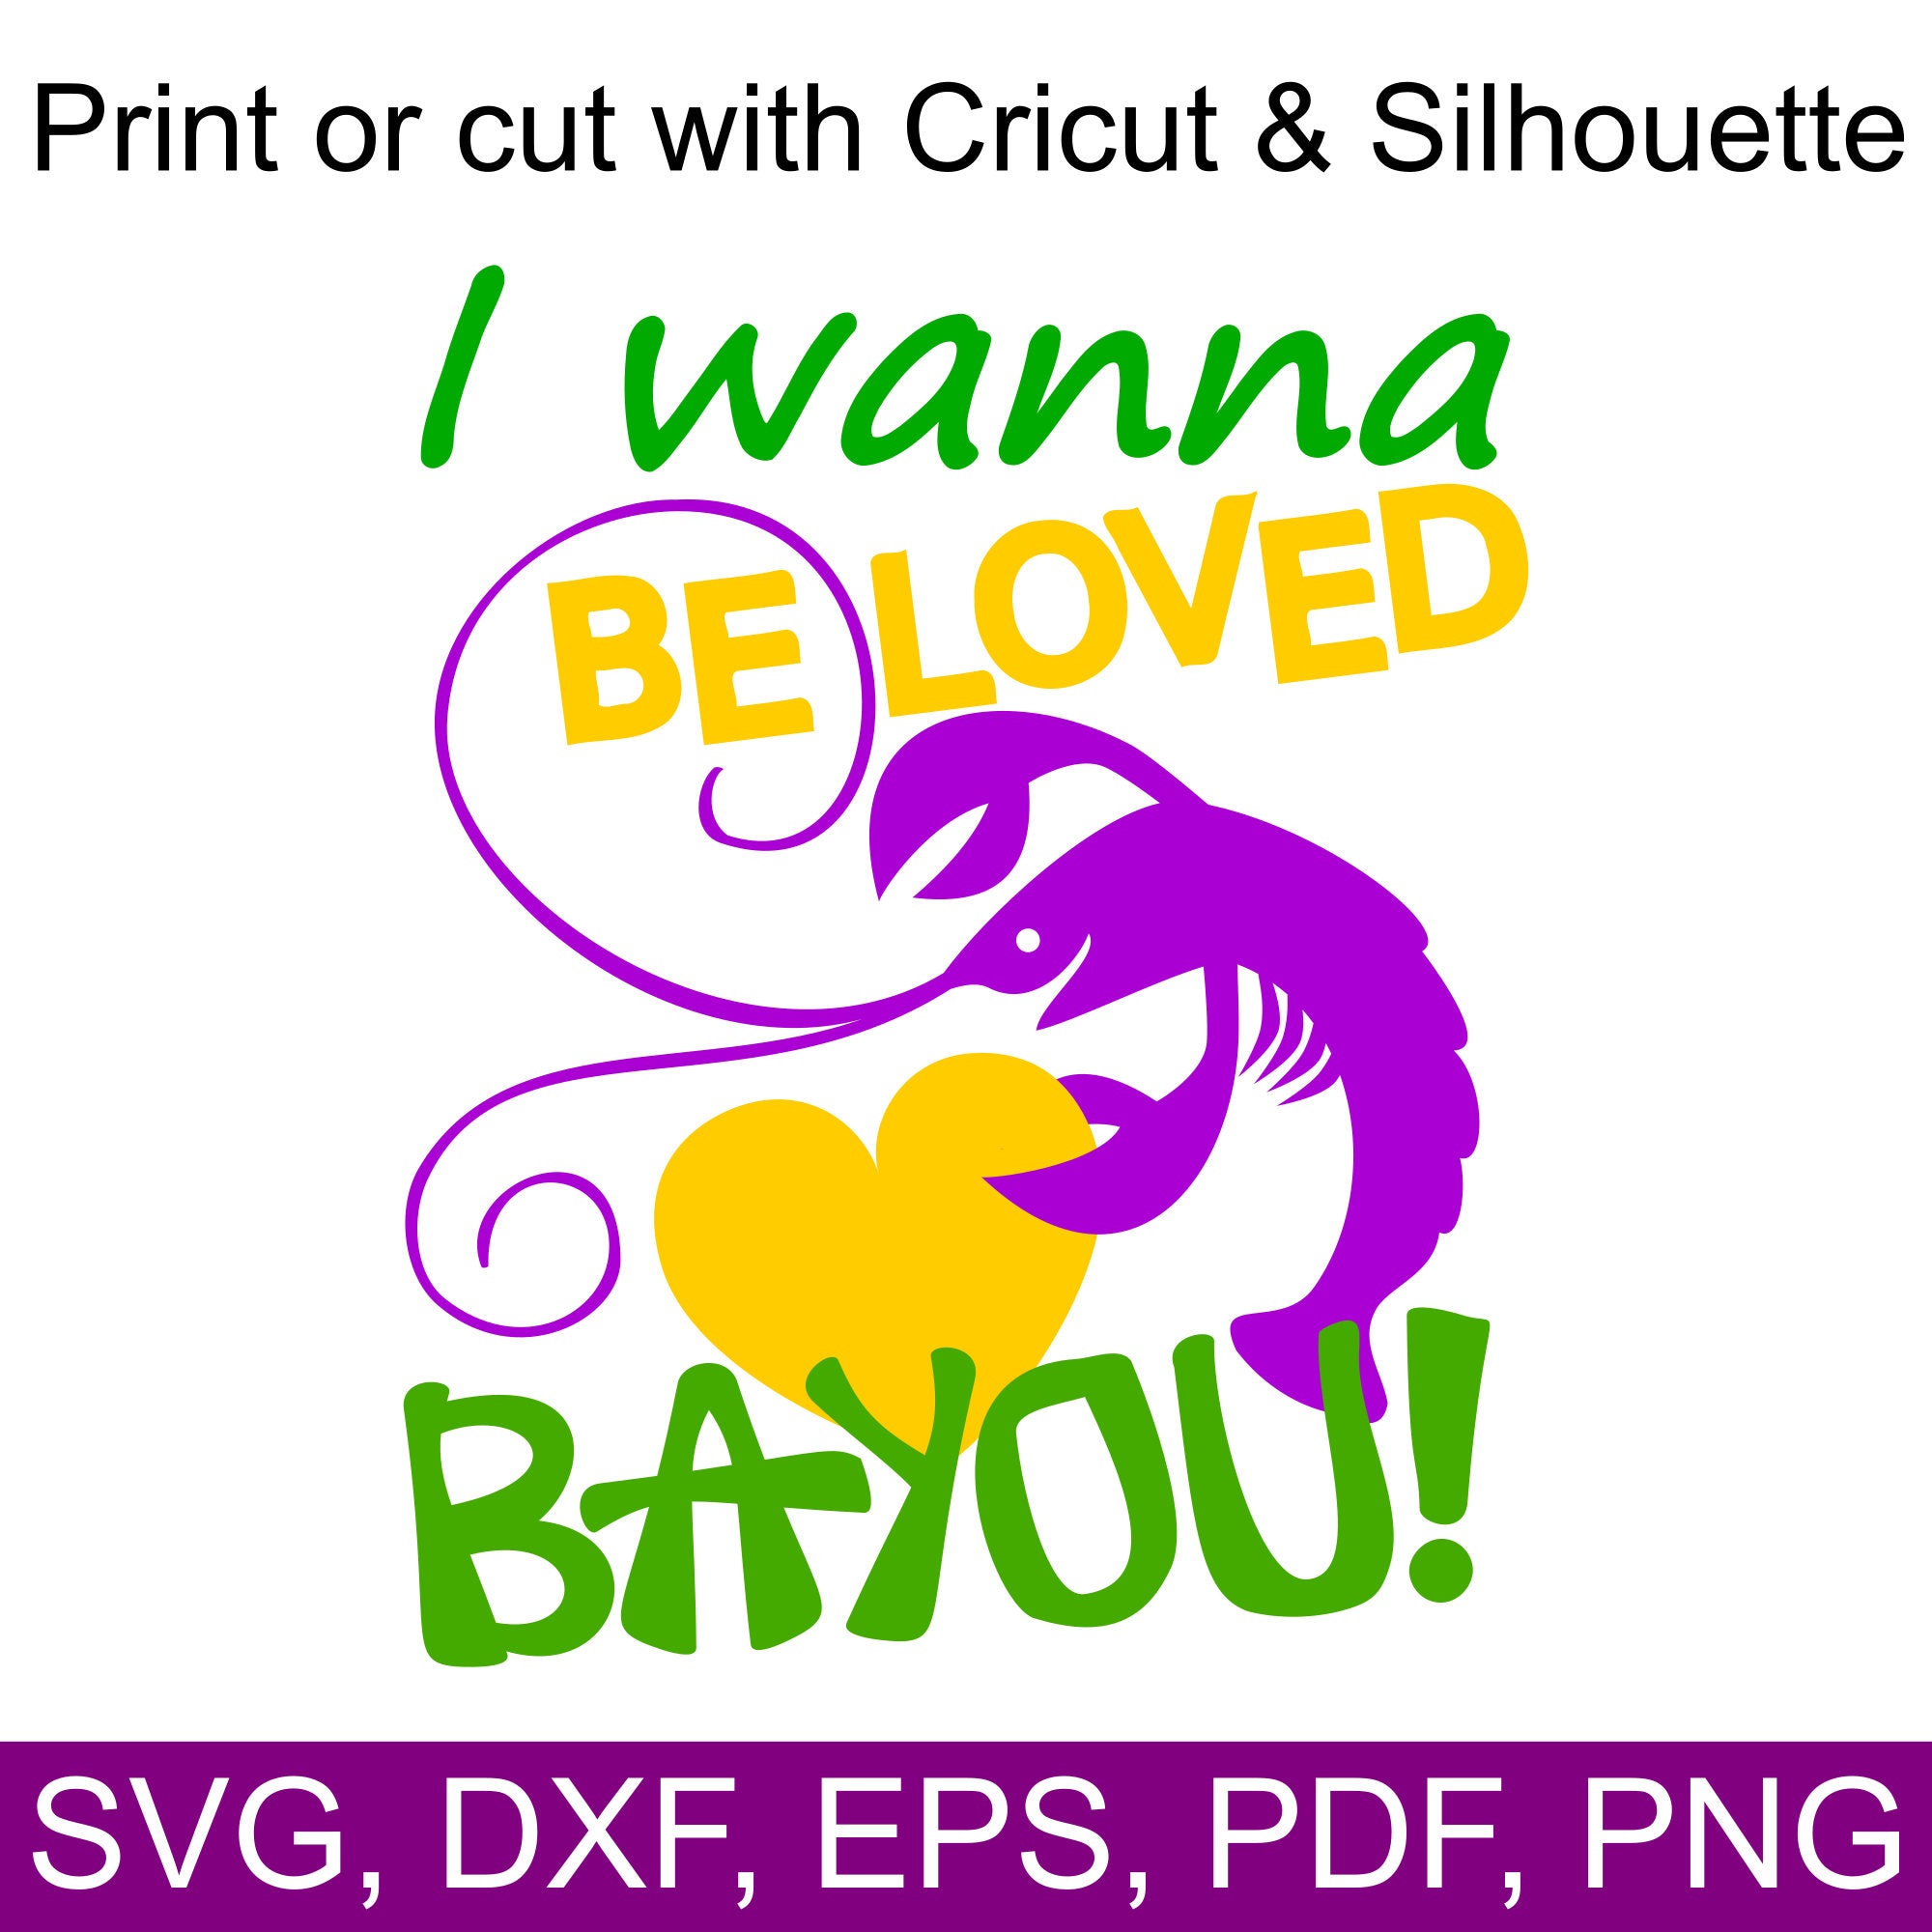 Free Free 335 Love Svg Mardi Gras SVG PNG EPS DXF File